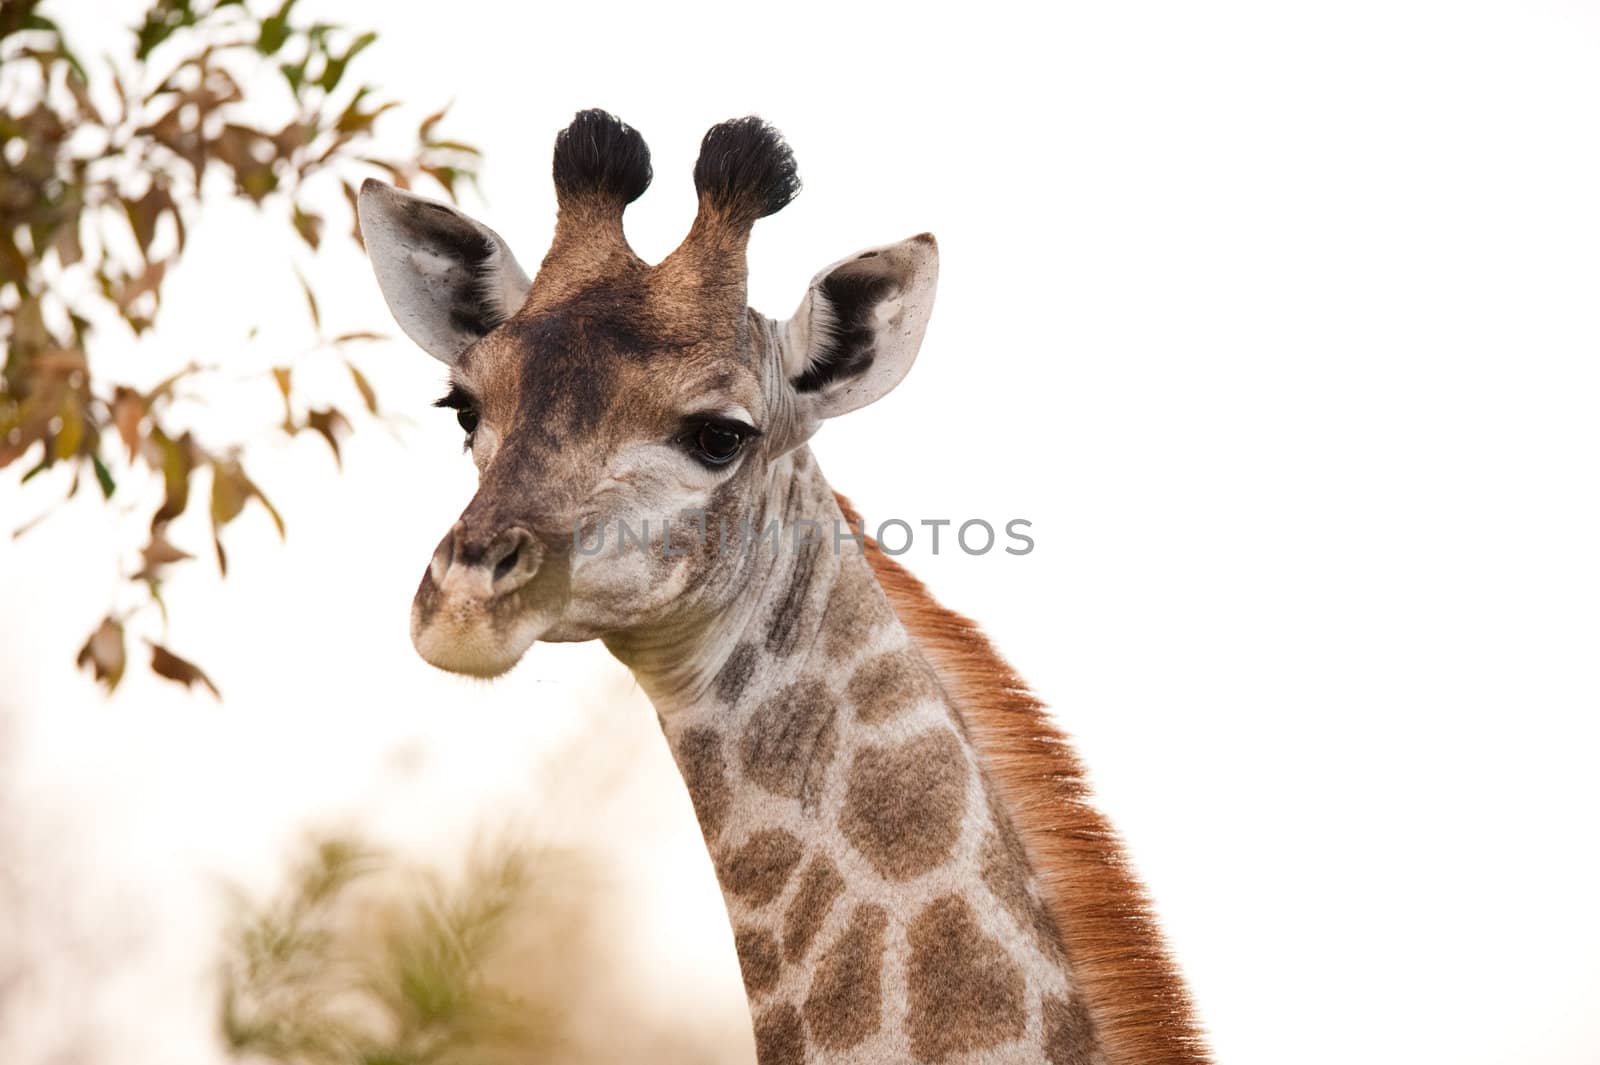 GIRAFFE (Giraffa camelopardalis) in the bush, South Africa